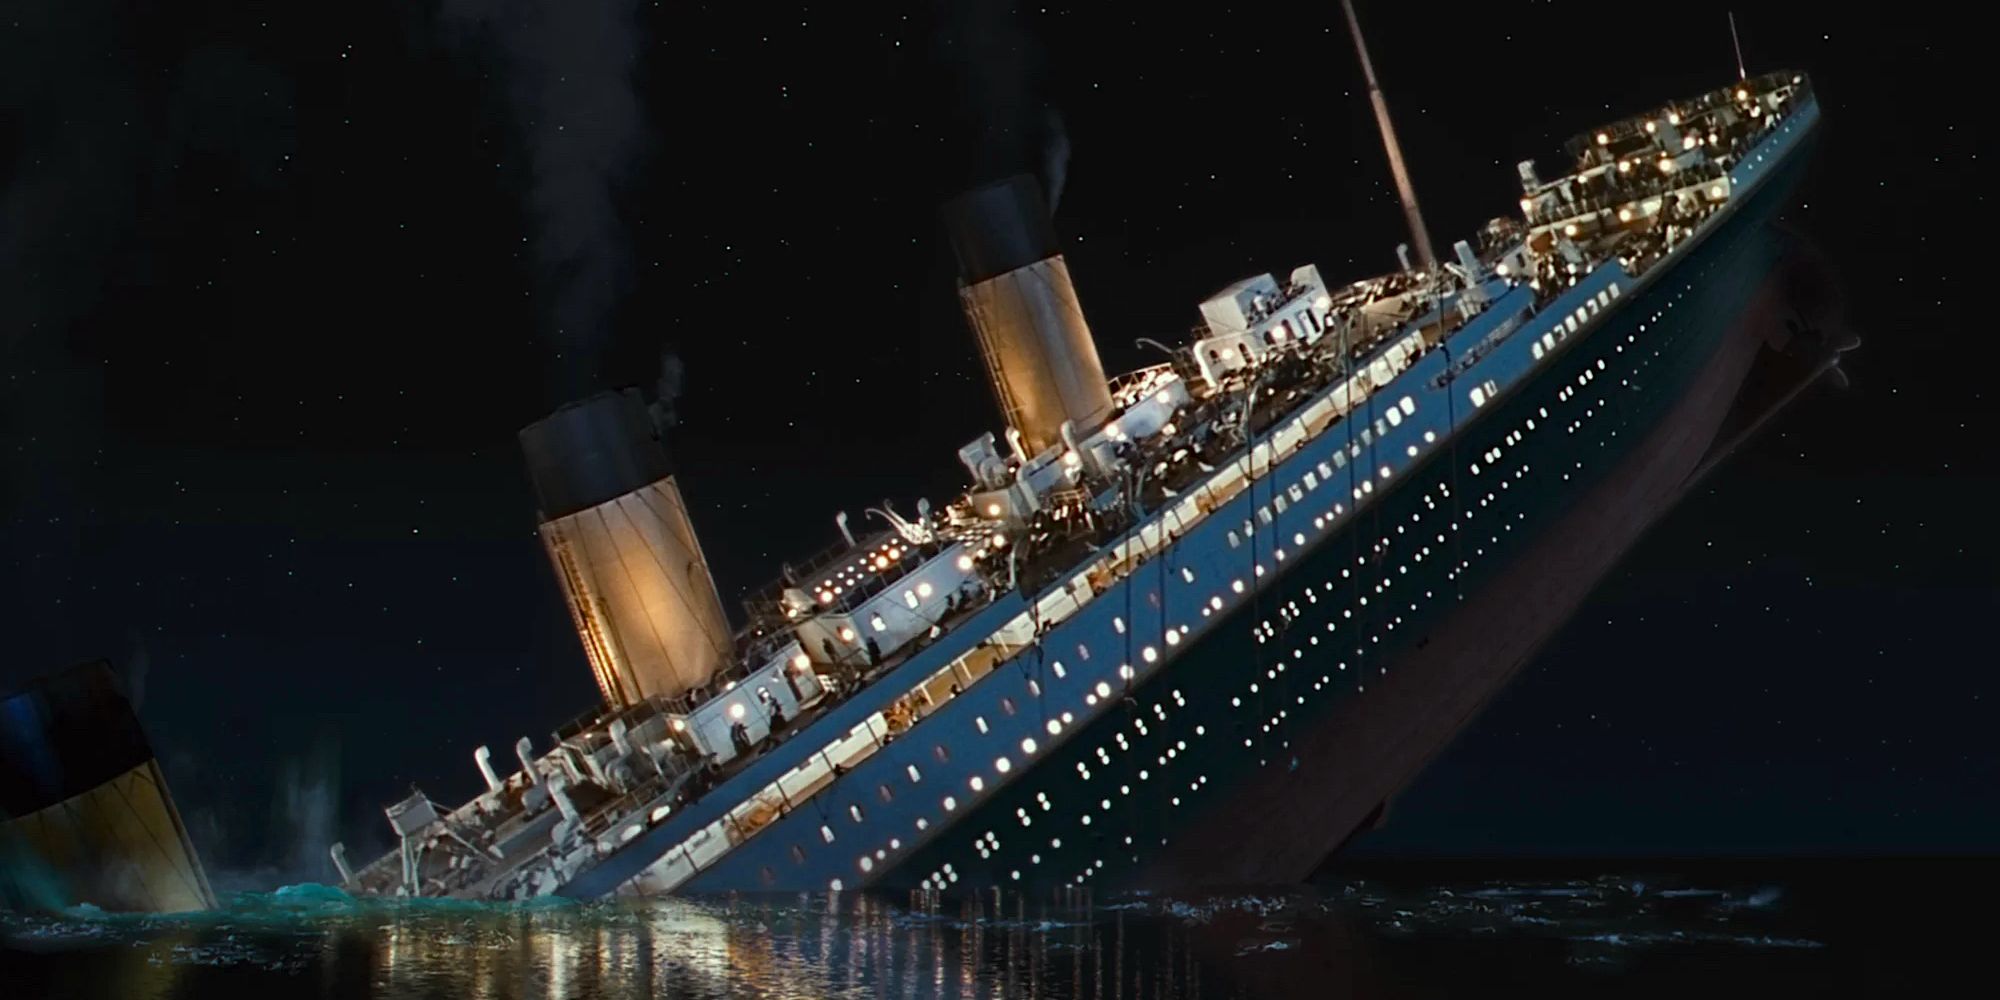 Titanic sinking at night